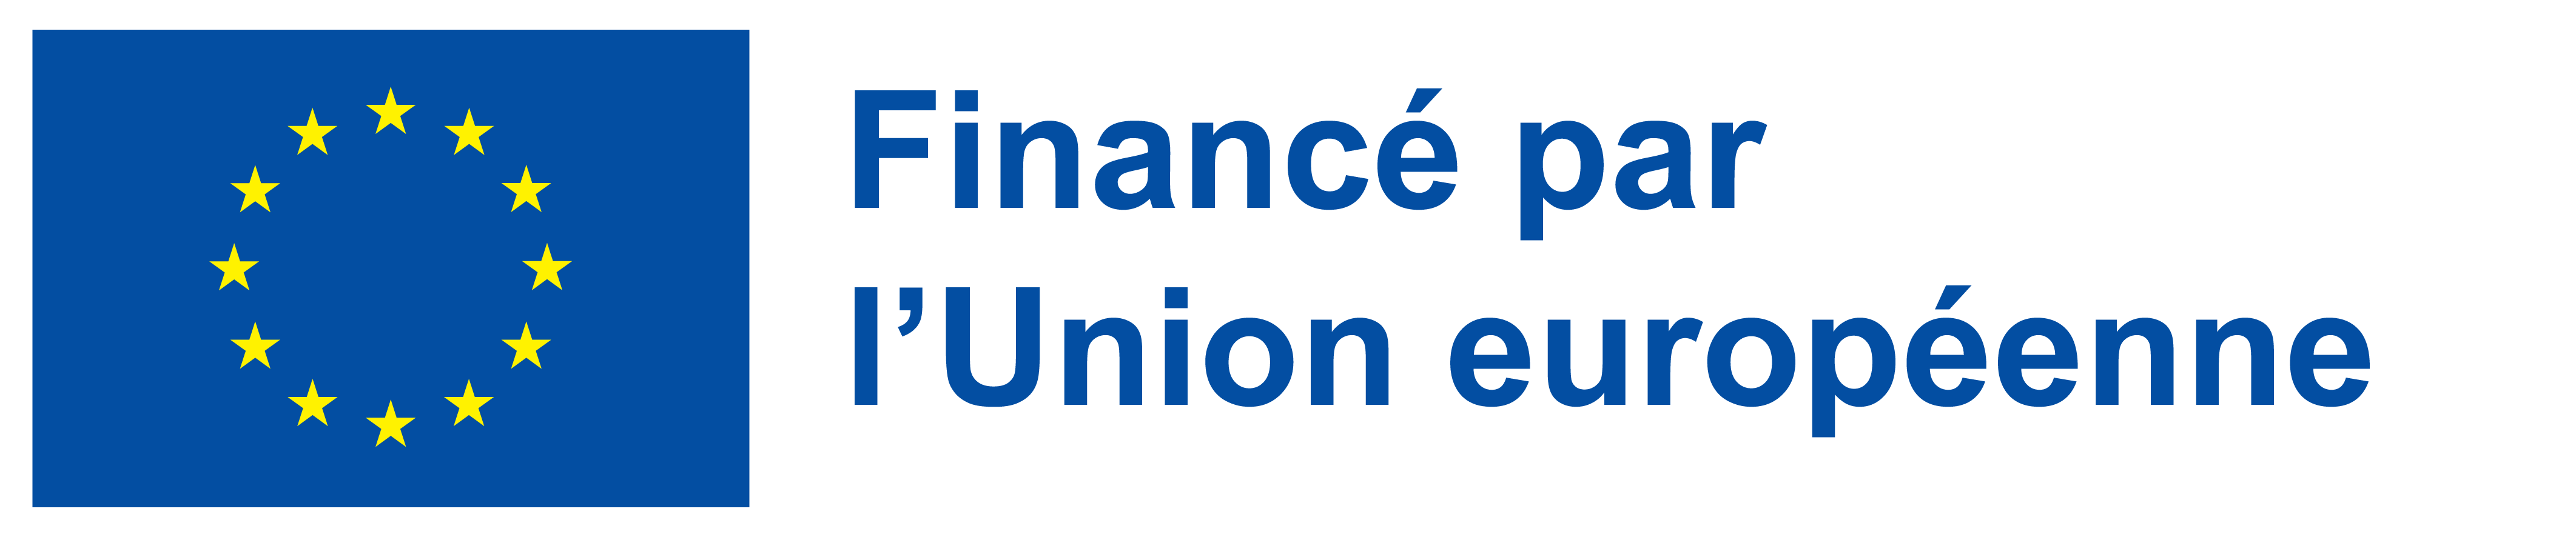 Logo EU projet financé 2021-2027